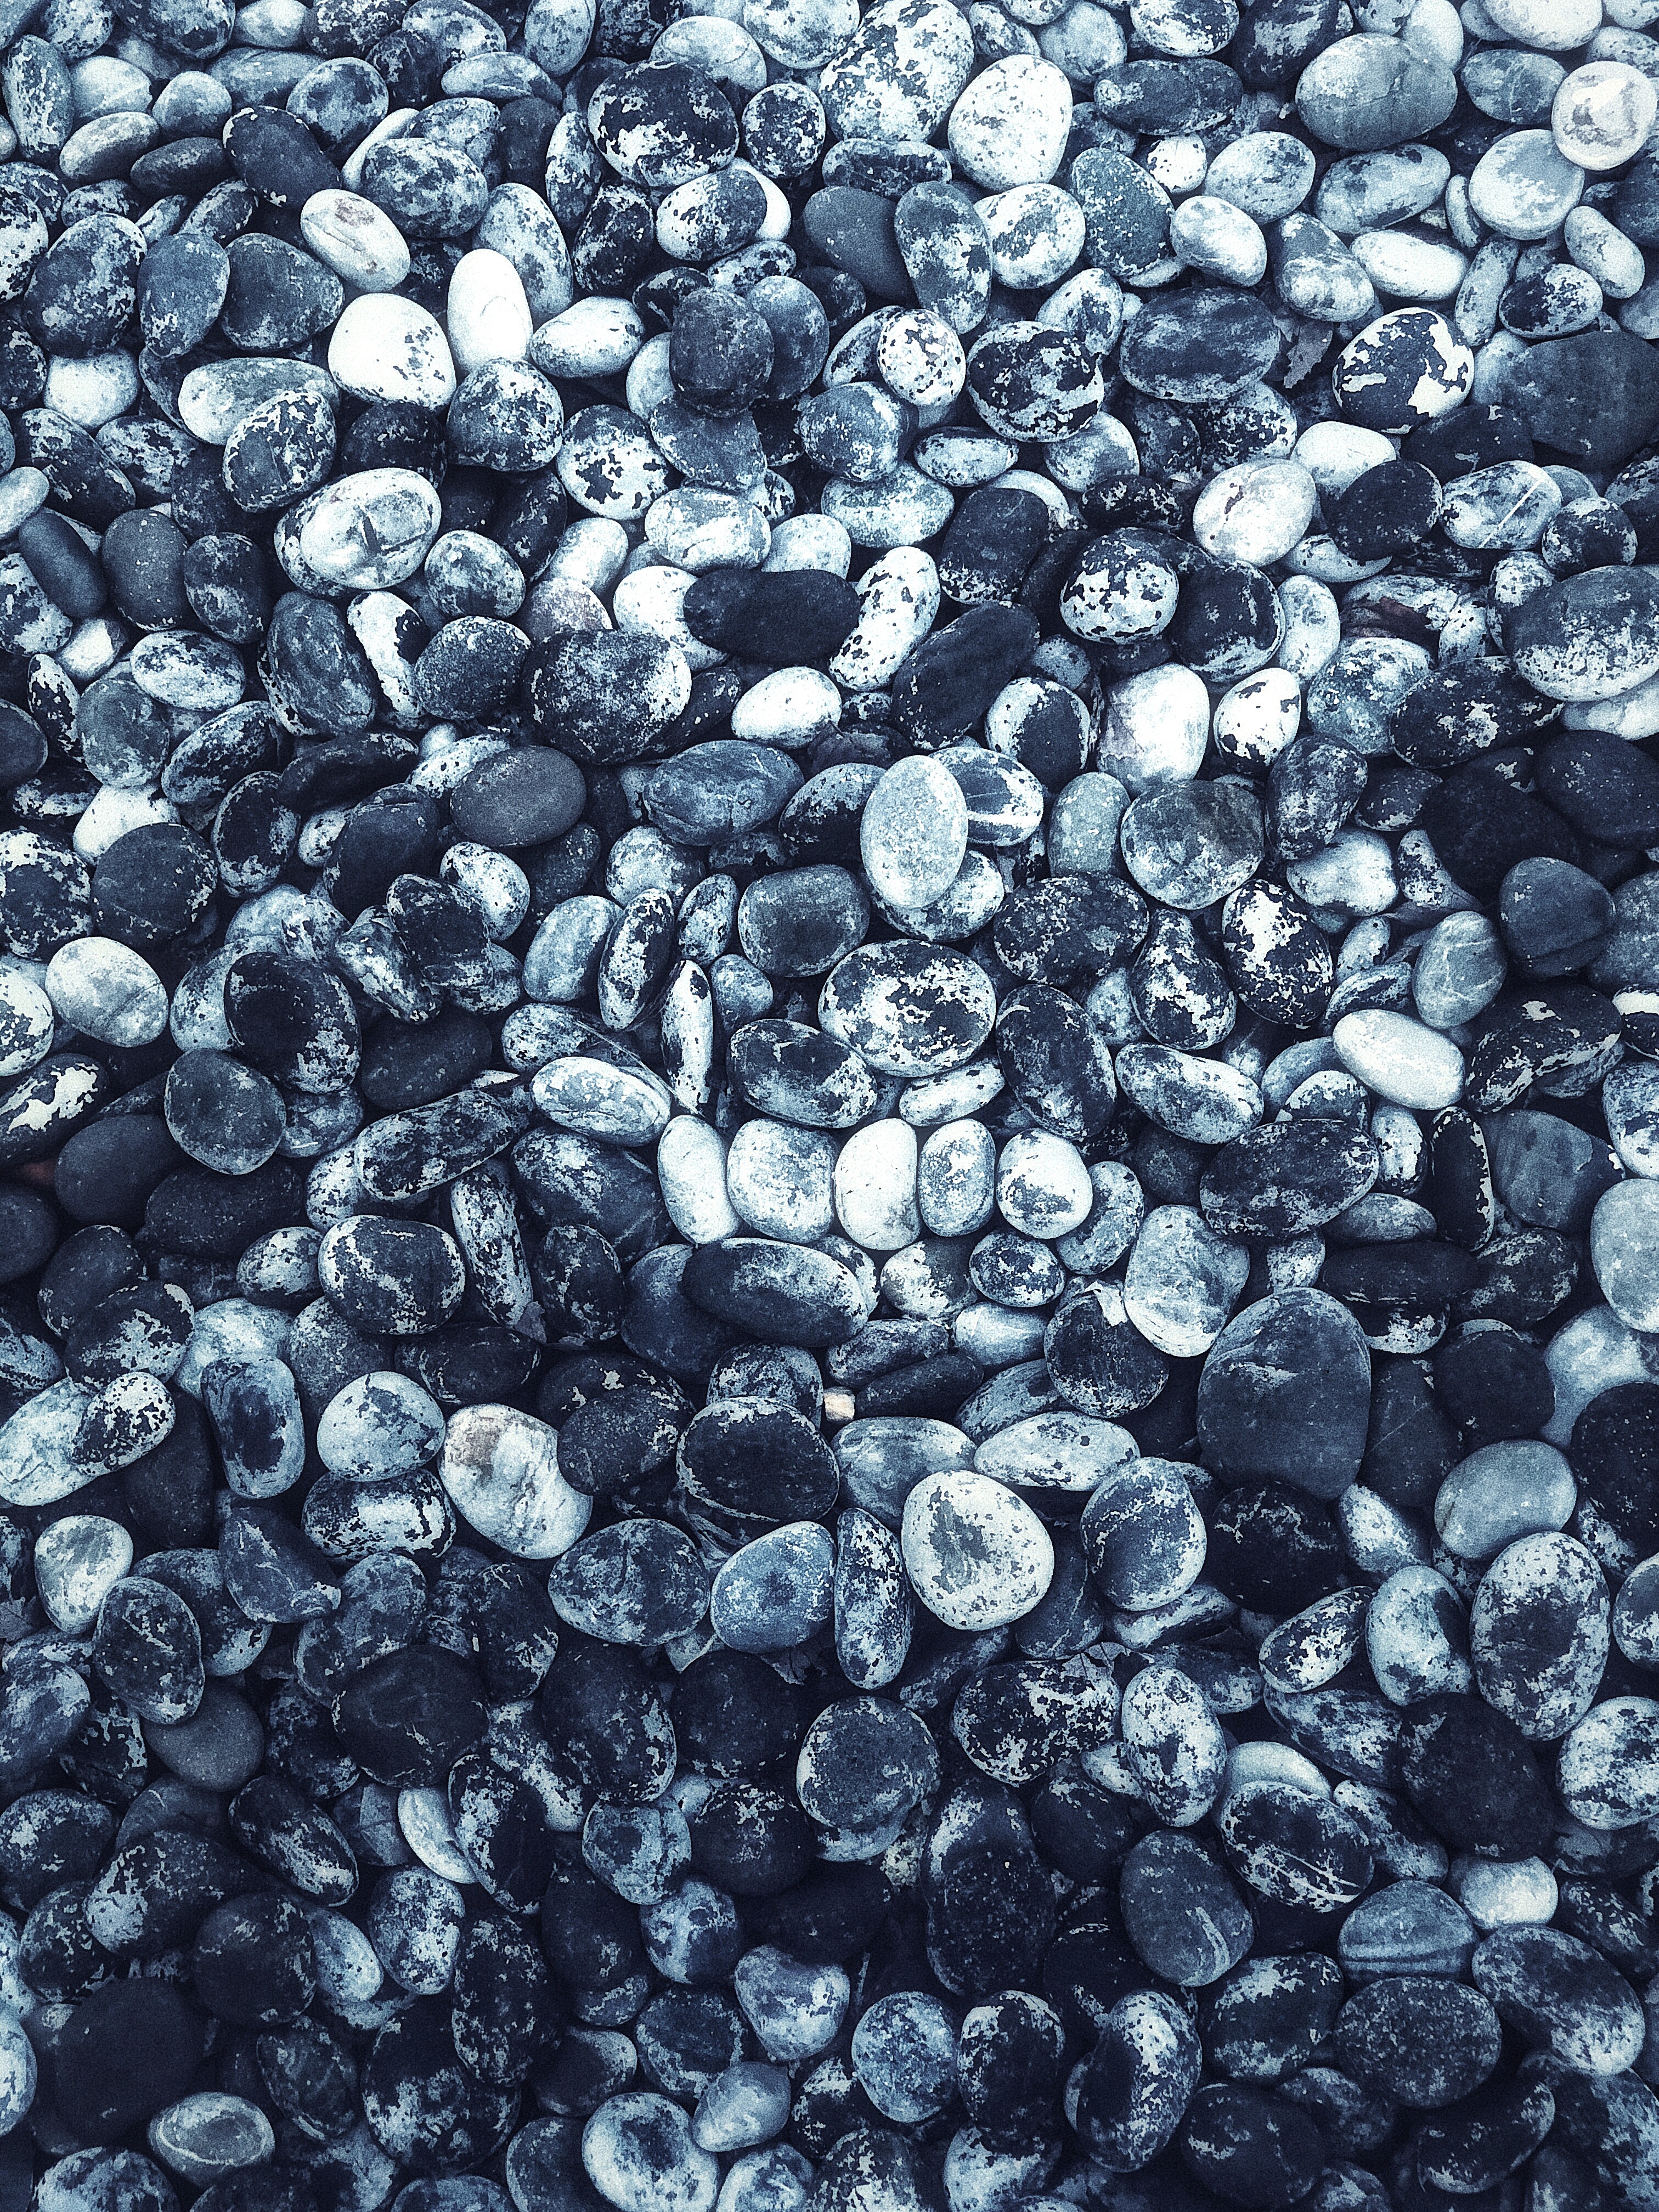 Popular Sea Stones Phone background